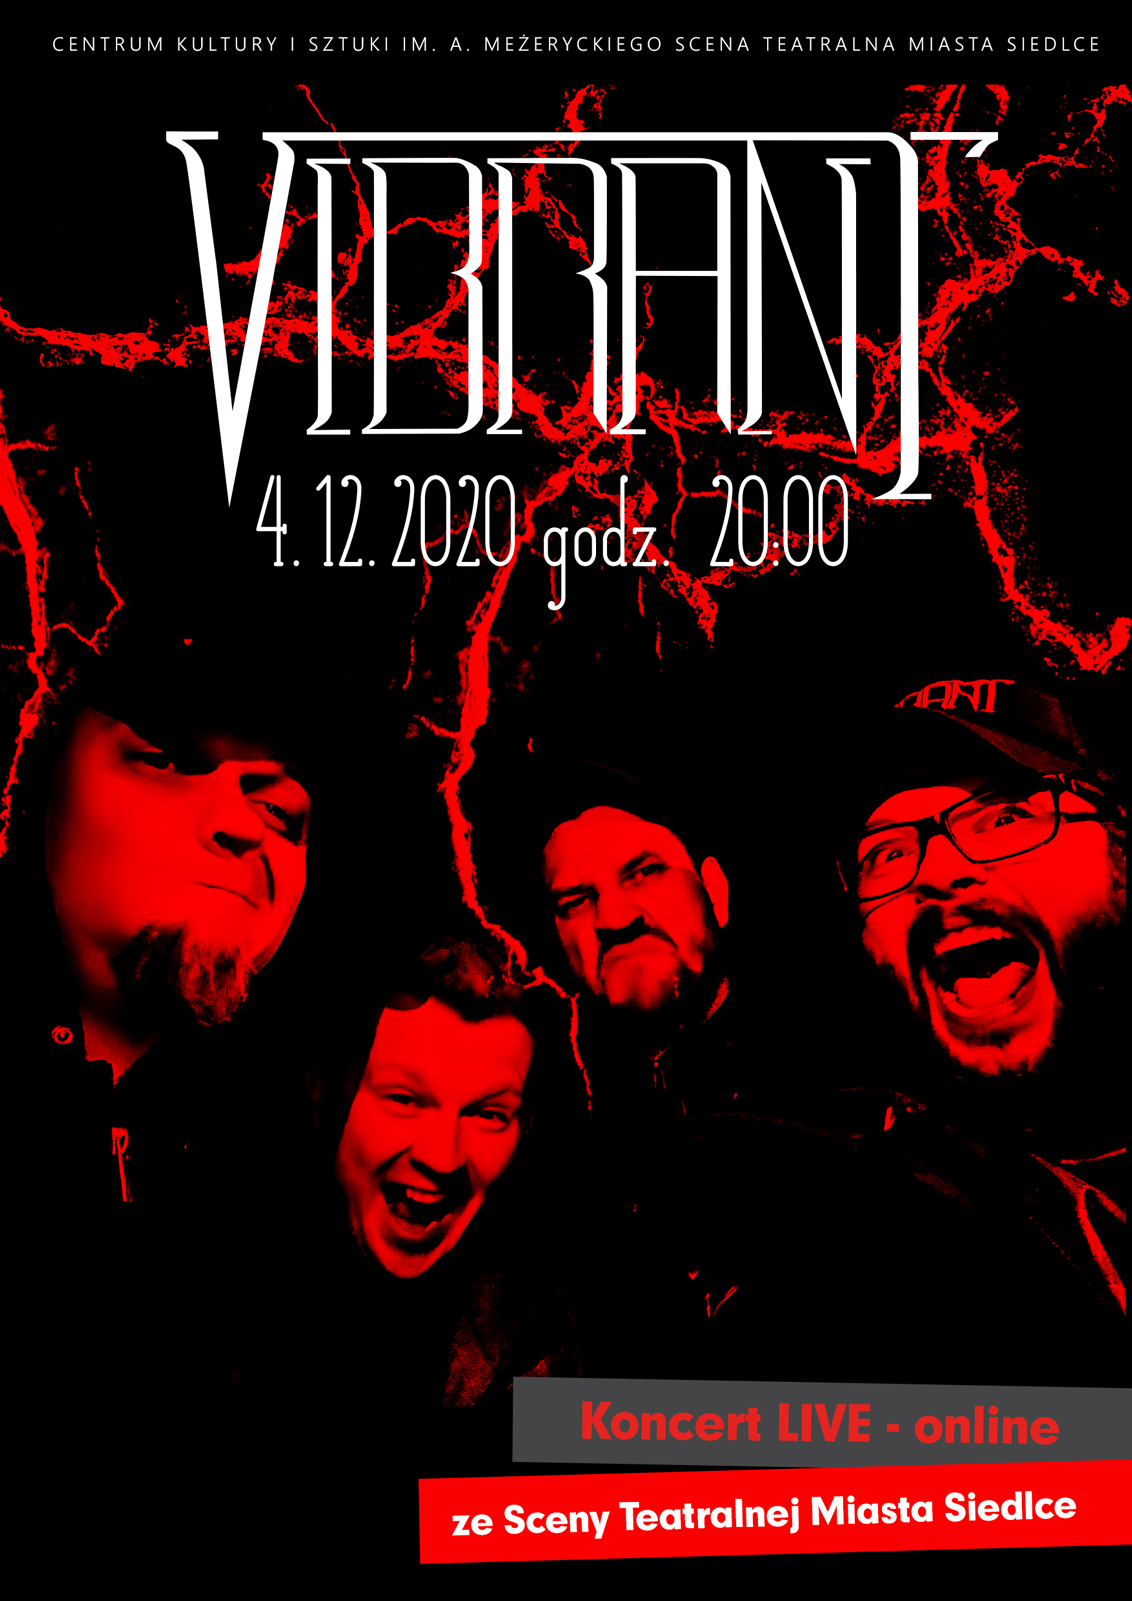 Koncert LIVE zespołu VIBRANT już 4 grudnia!